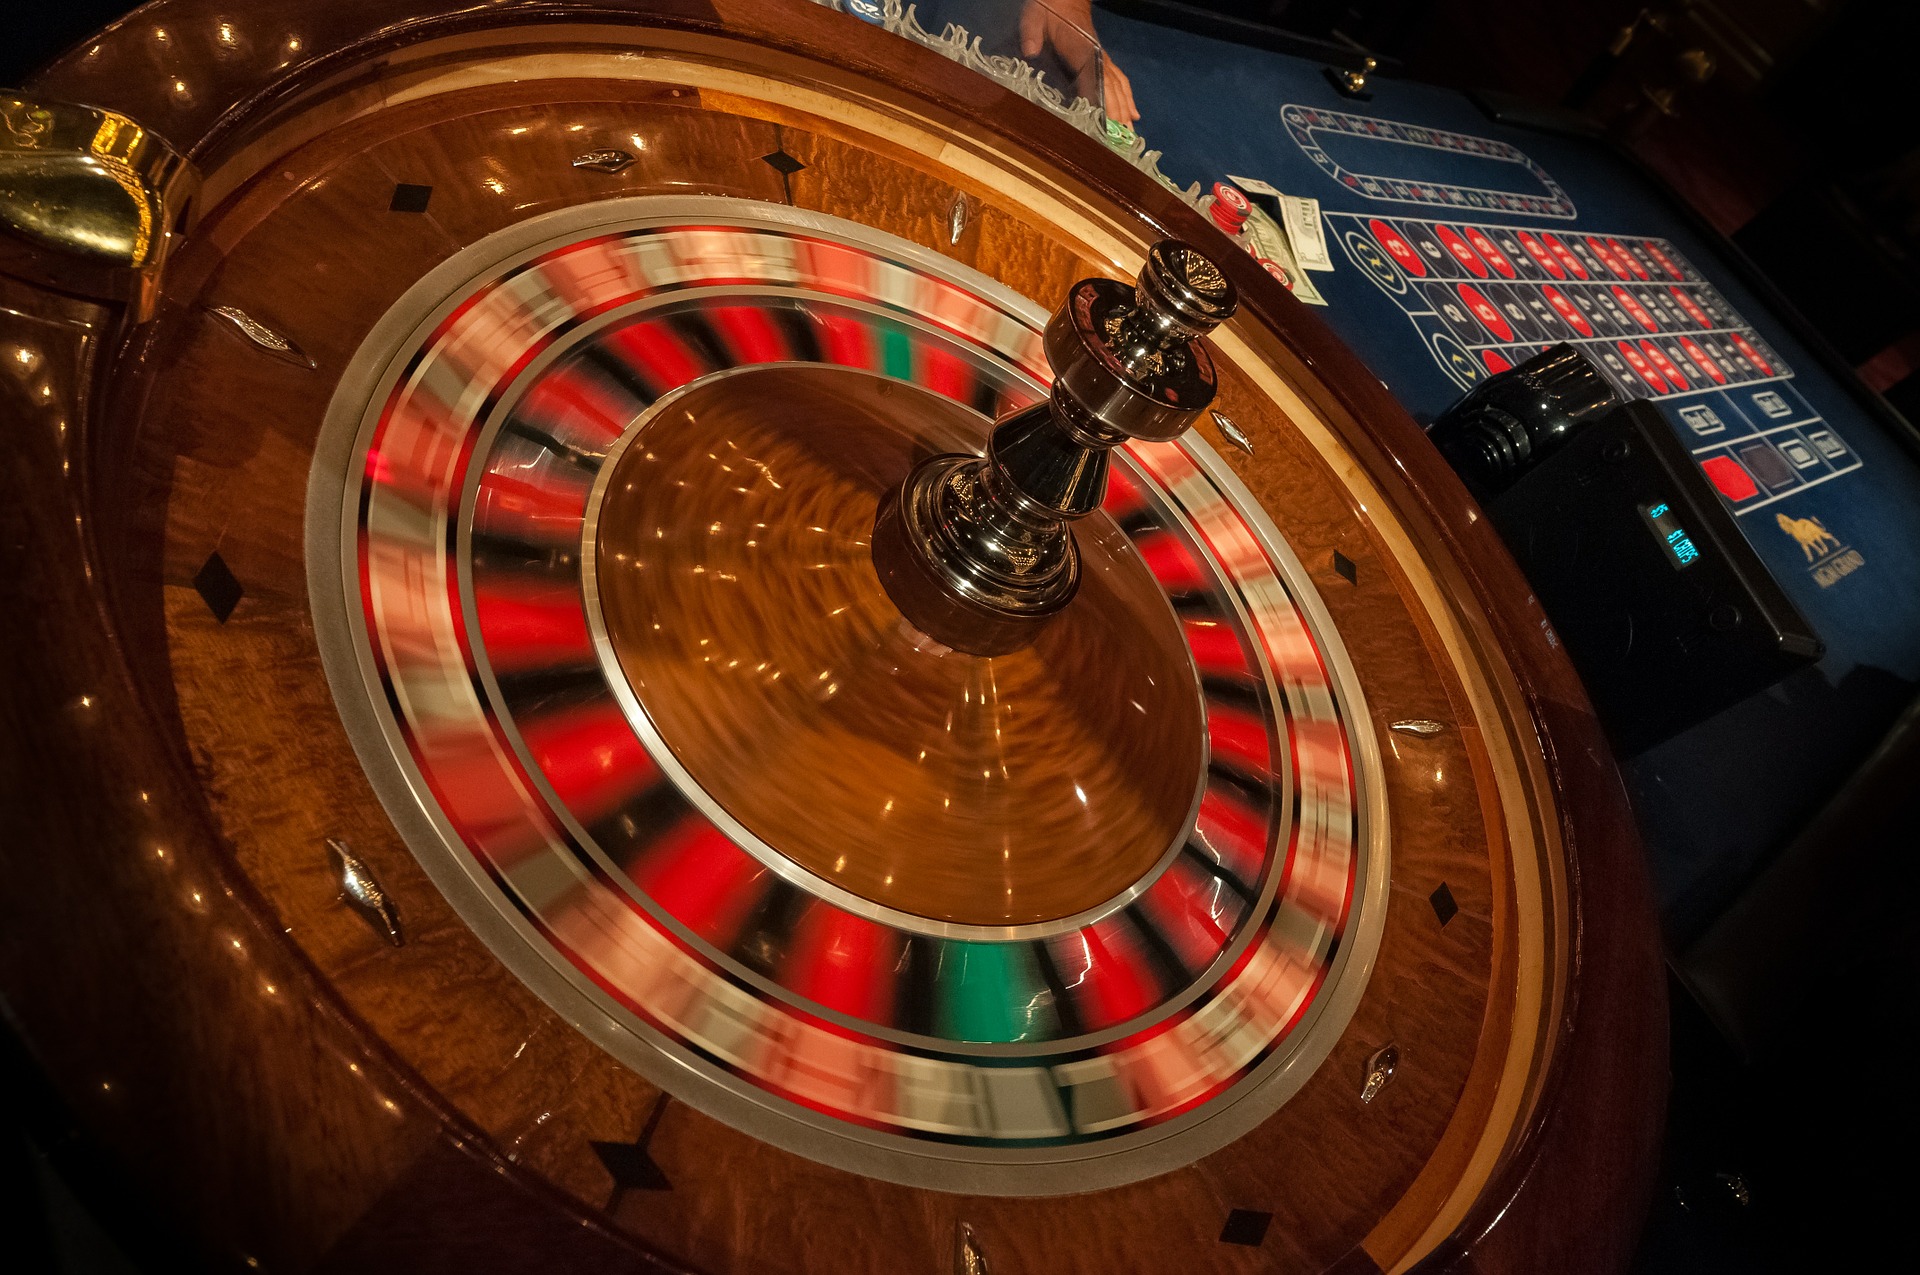 slot party casino